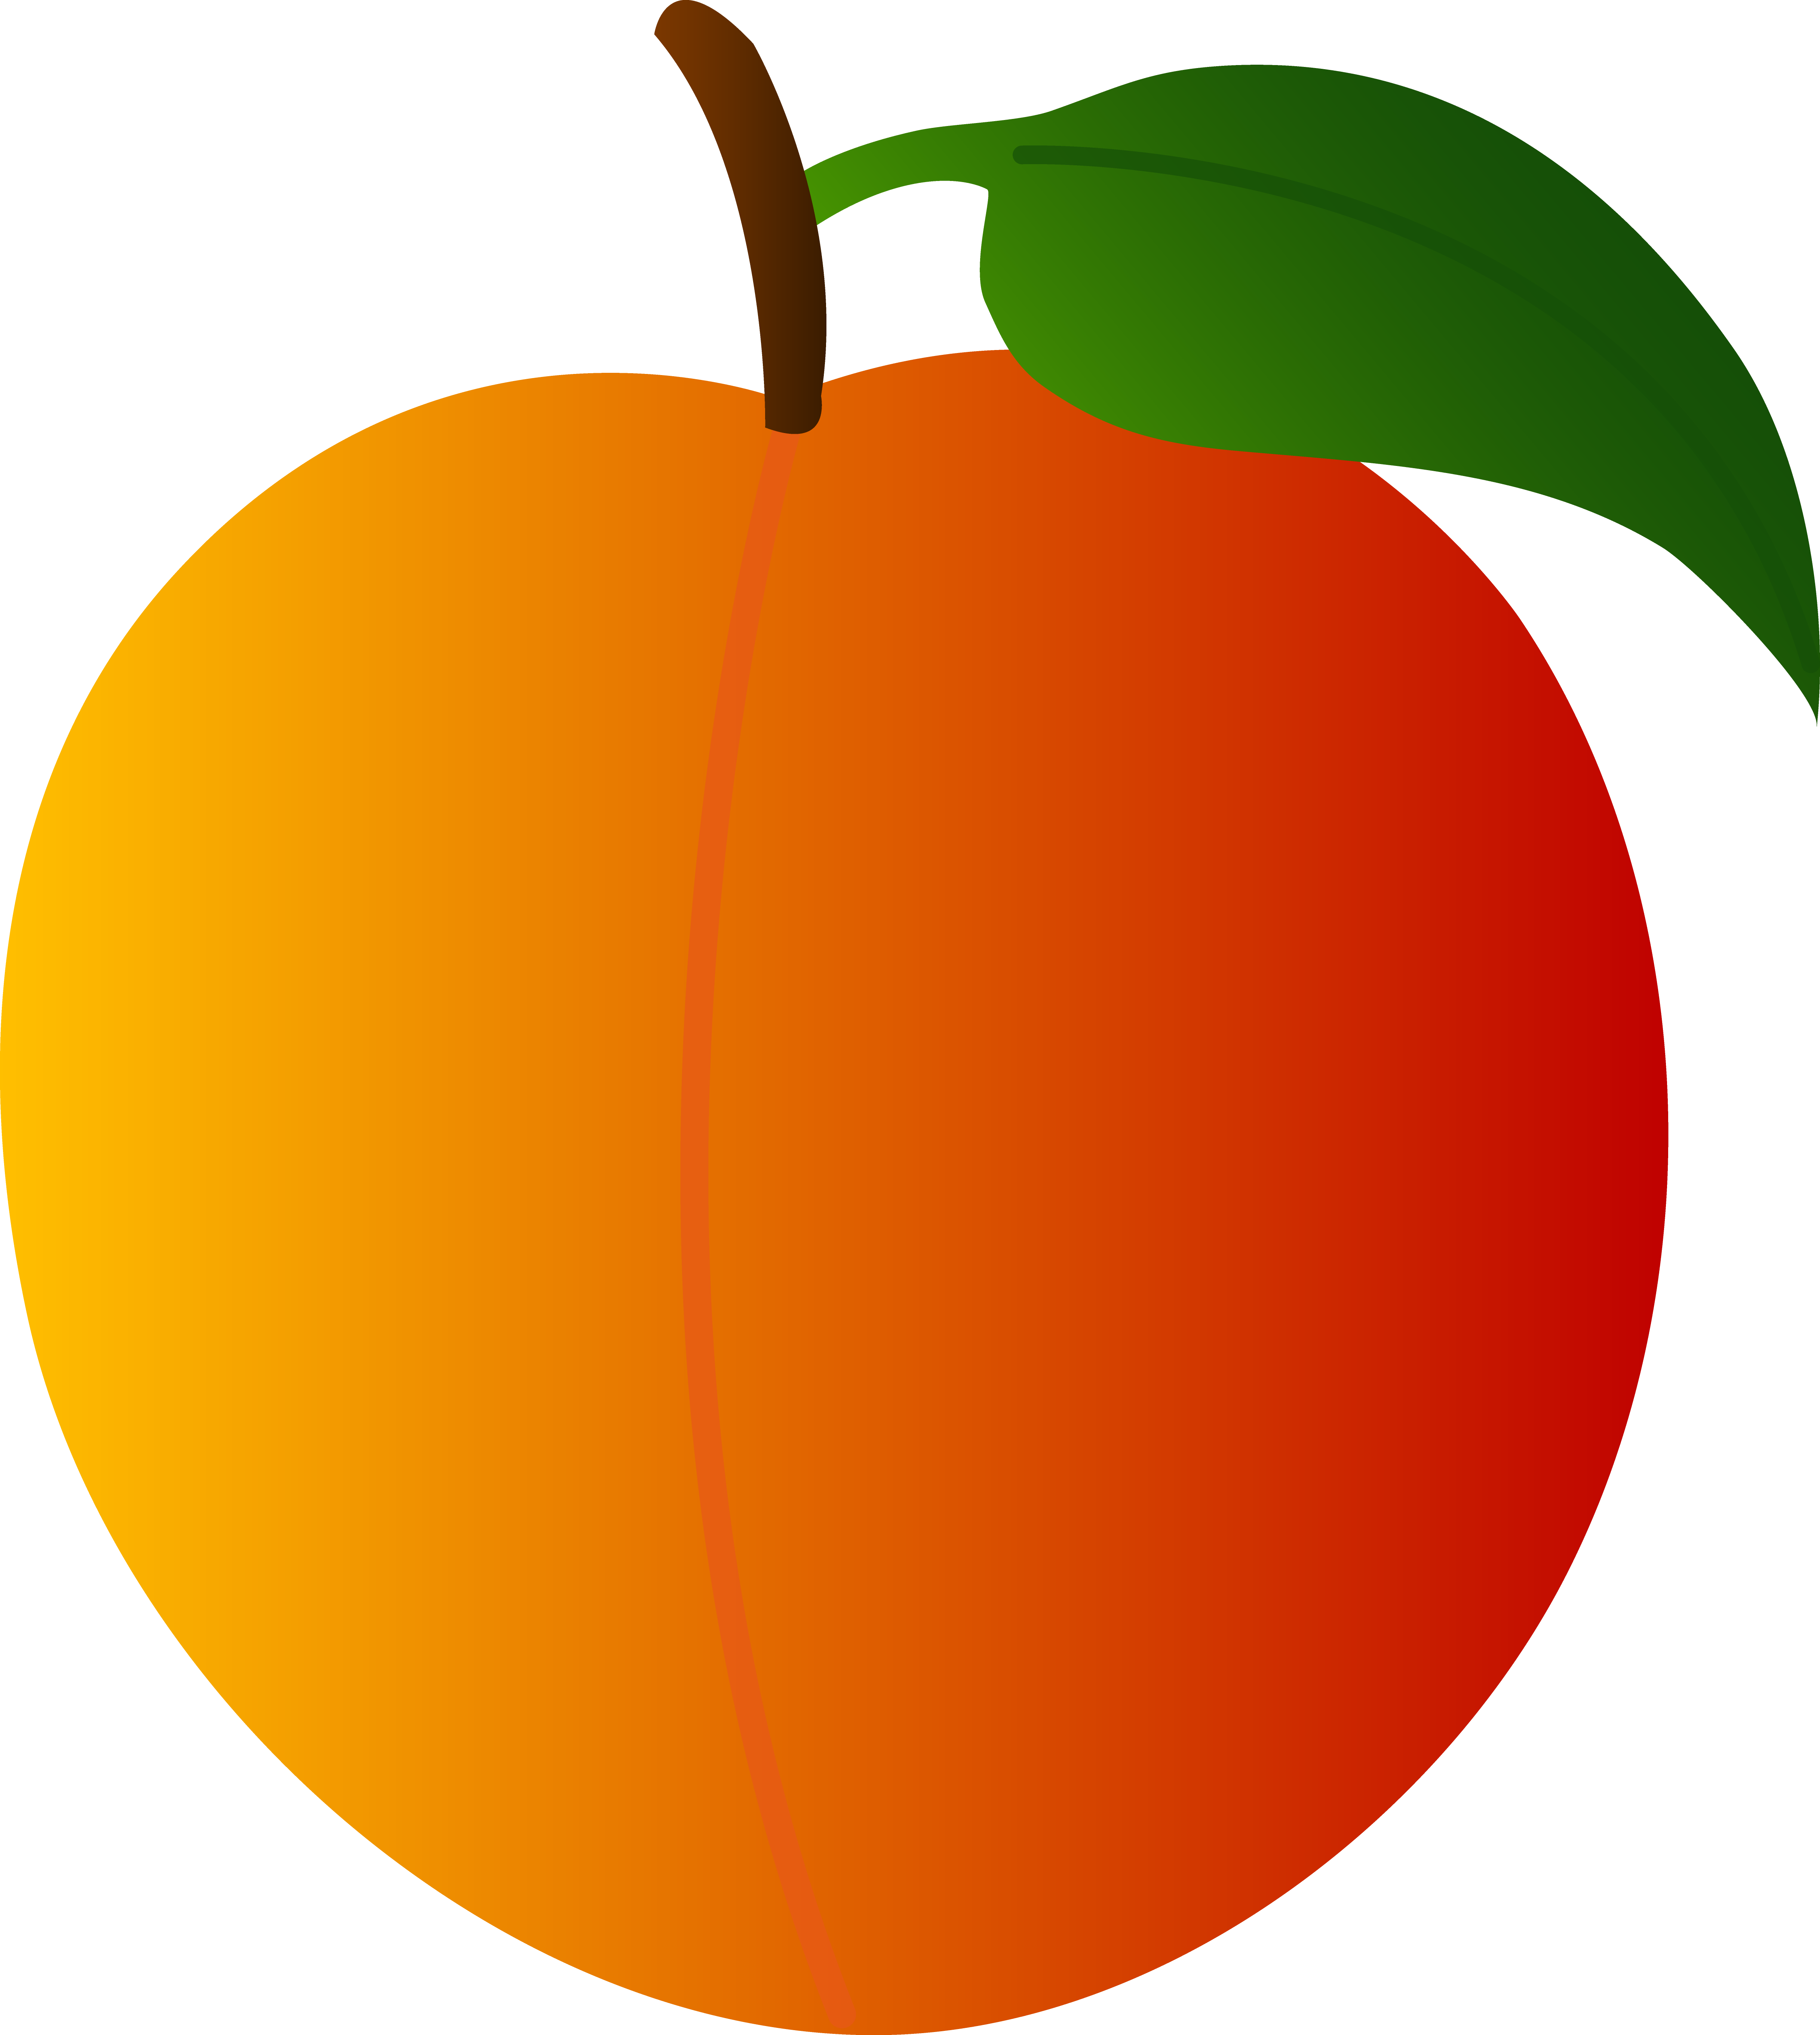 Juicy Orange Peach - Free Clip Art